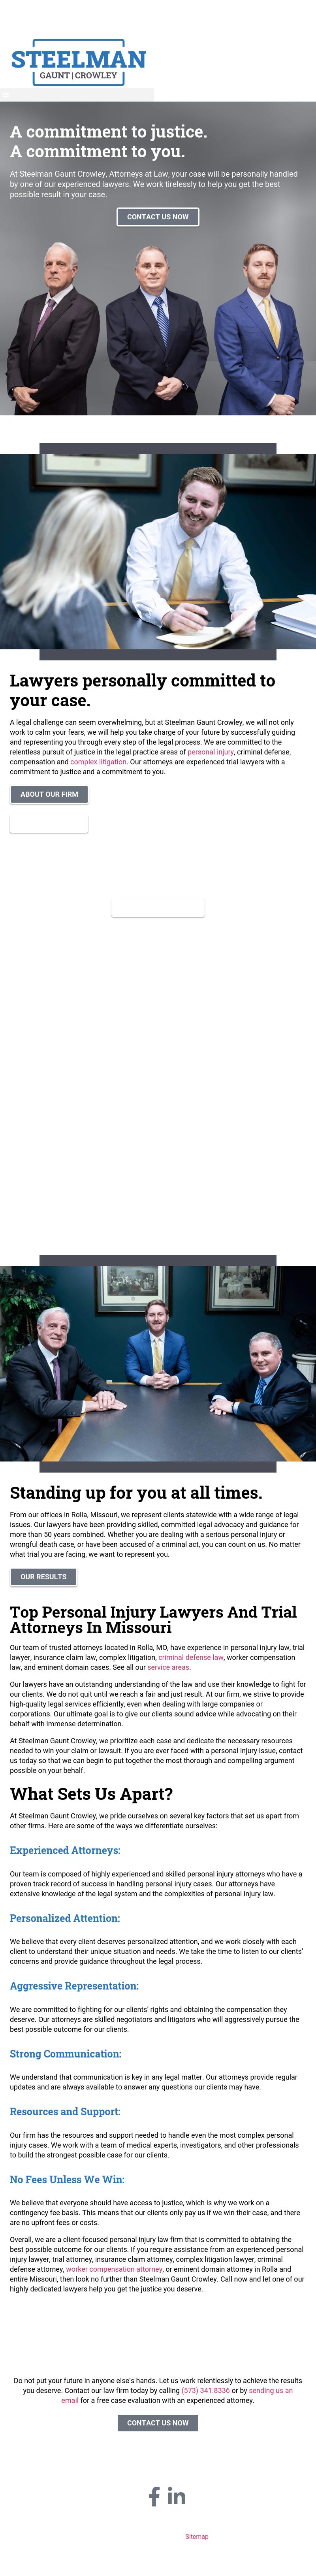 Steelman, Gaunt & Horsefield, Attorneys at Law - Rolla MO Lawyers